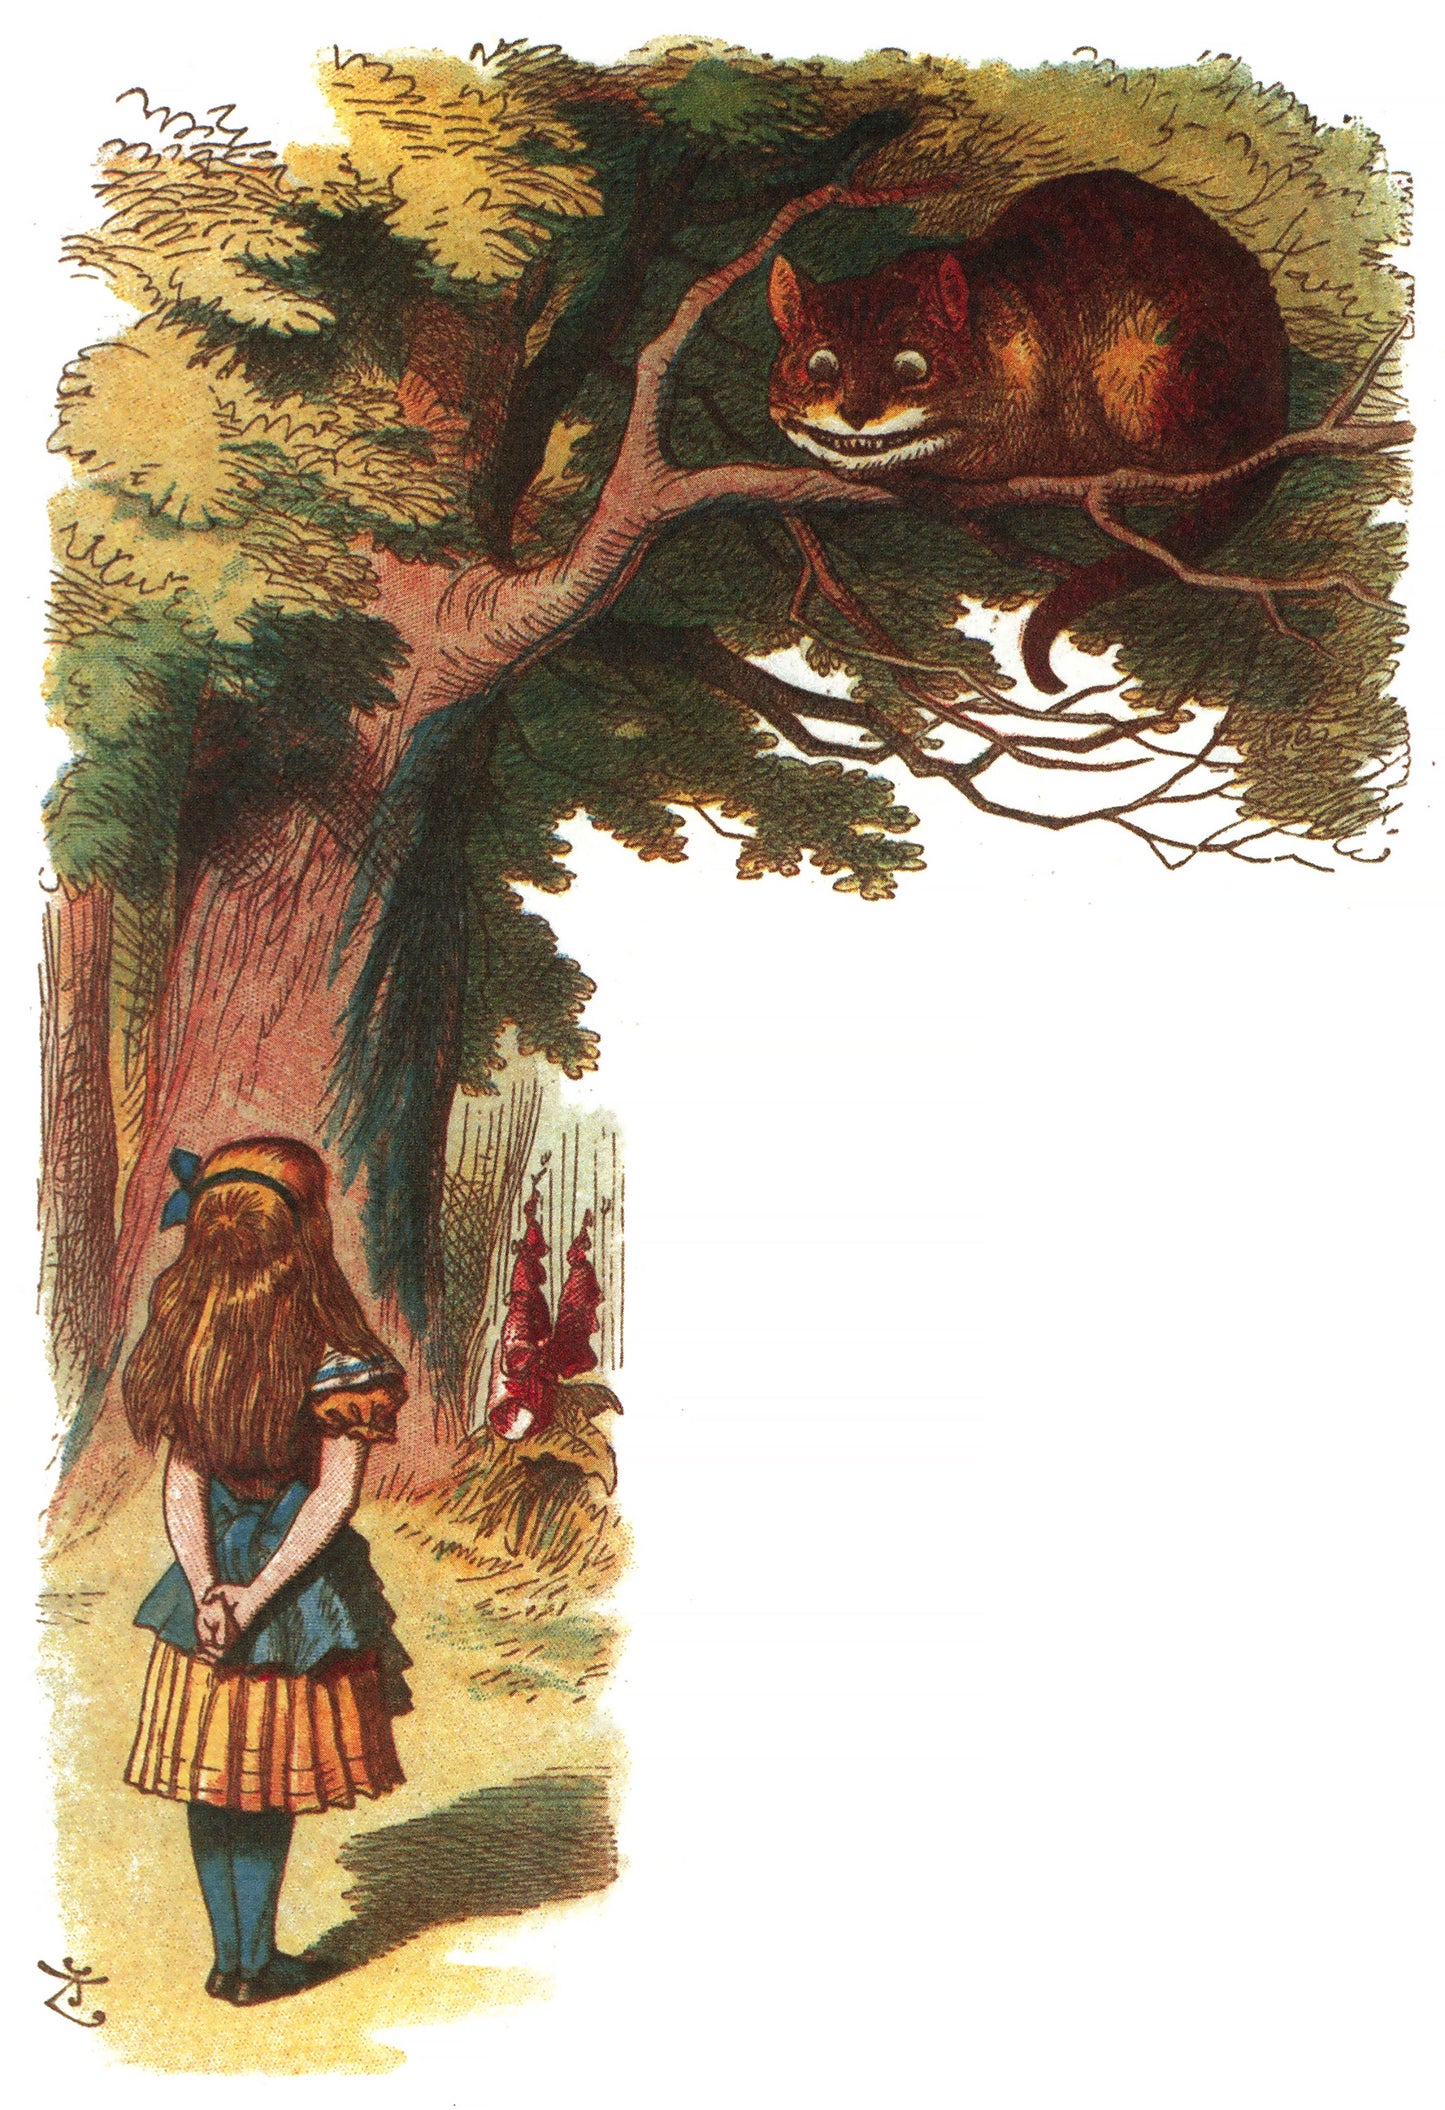 Alice in Wonderland Colored Illustrations [20 Images]